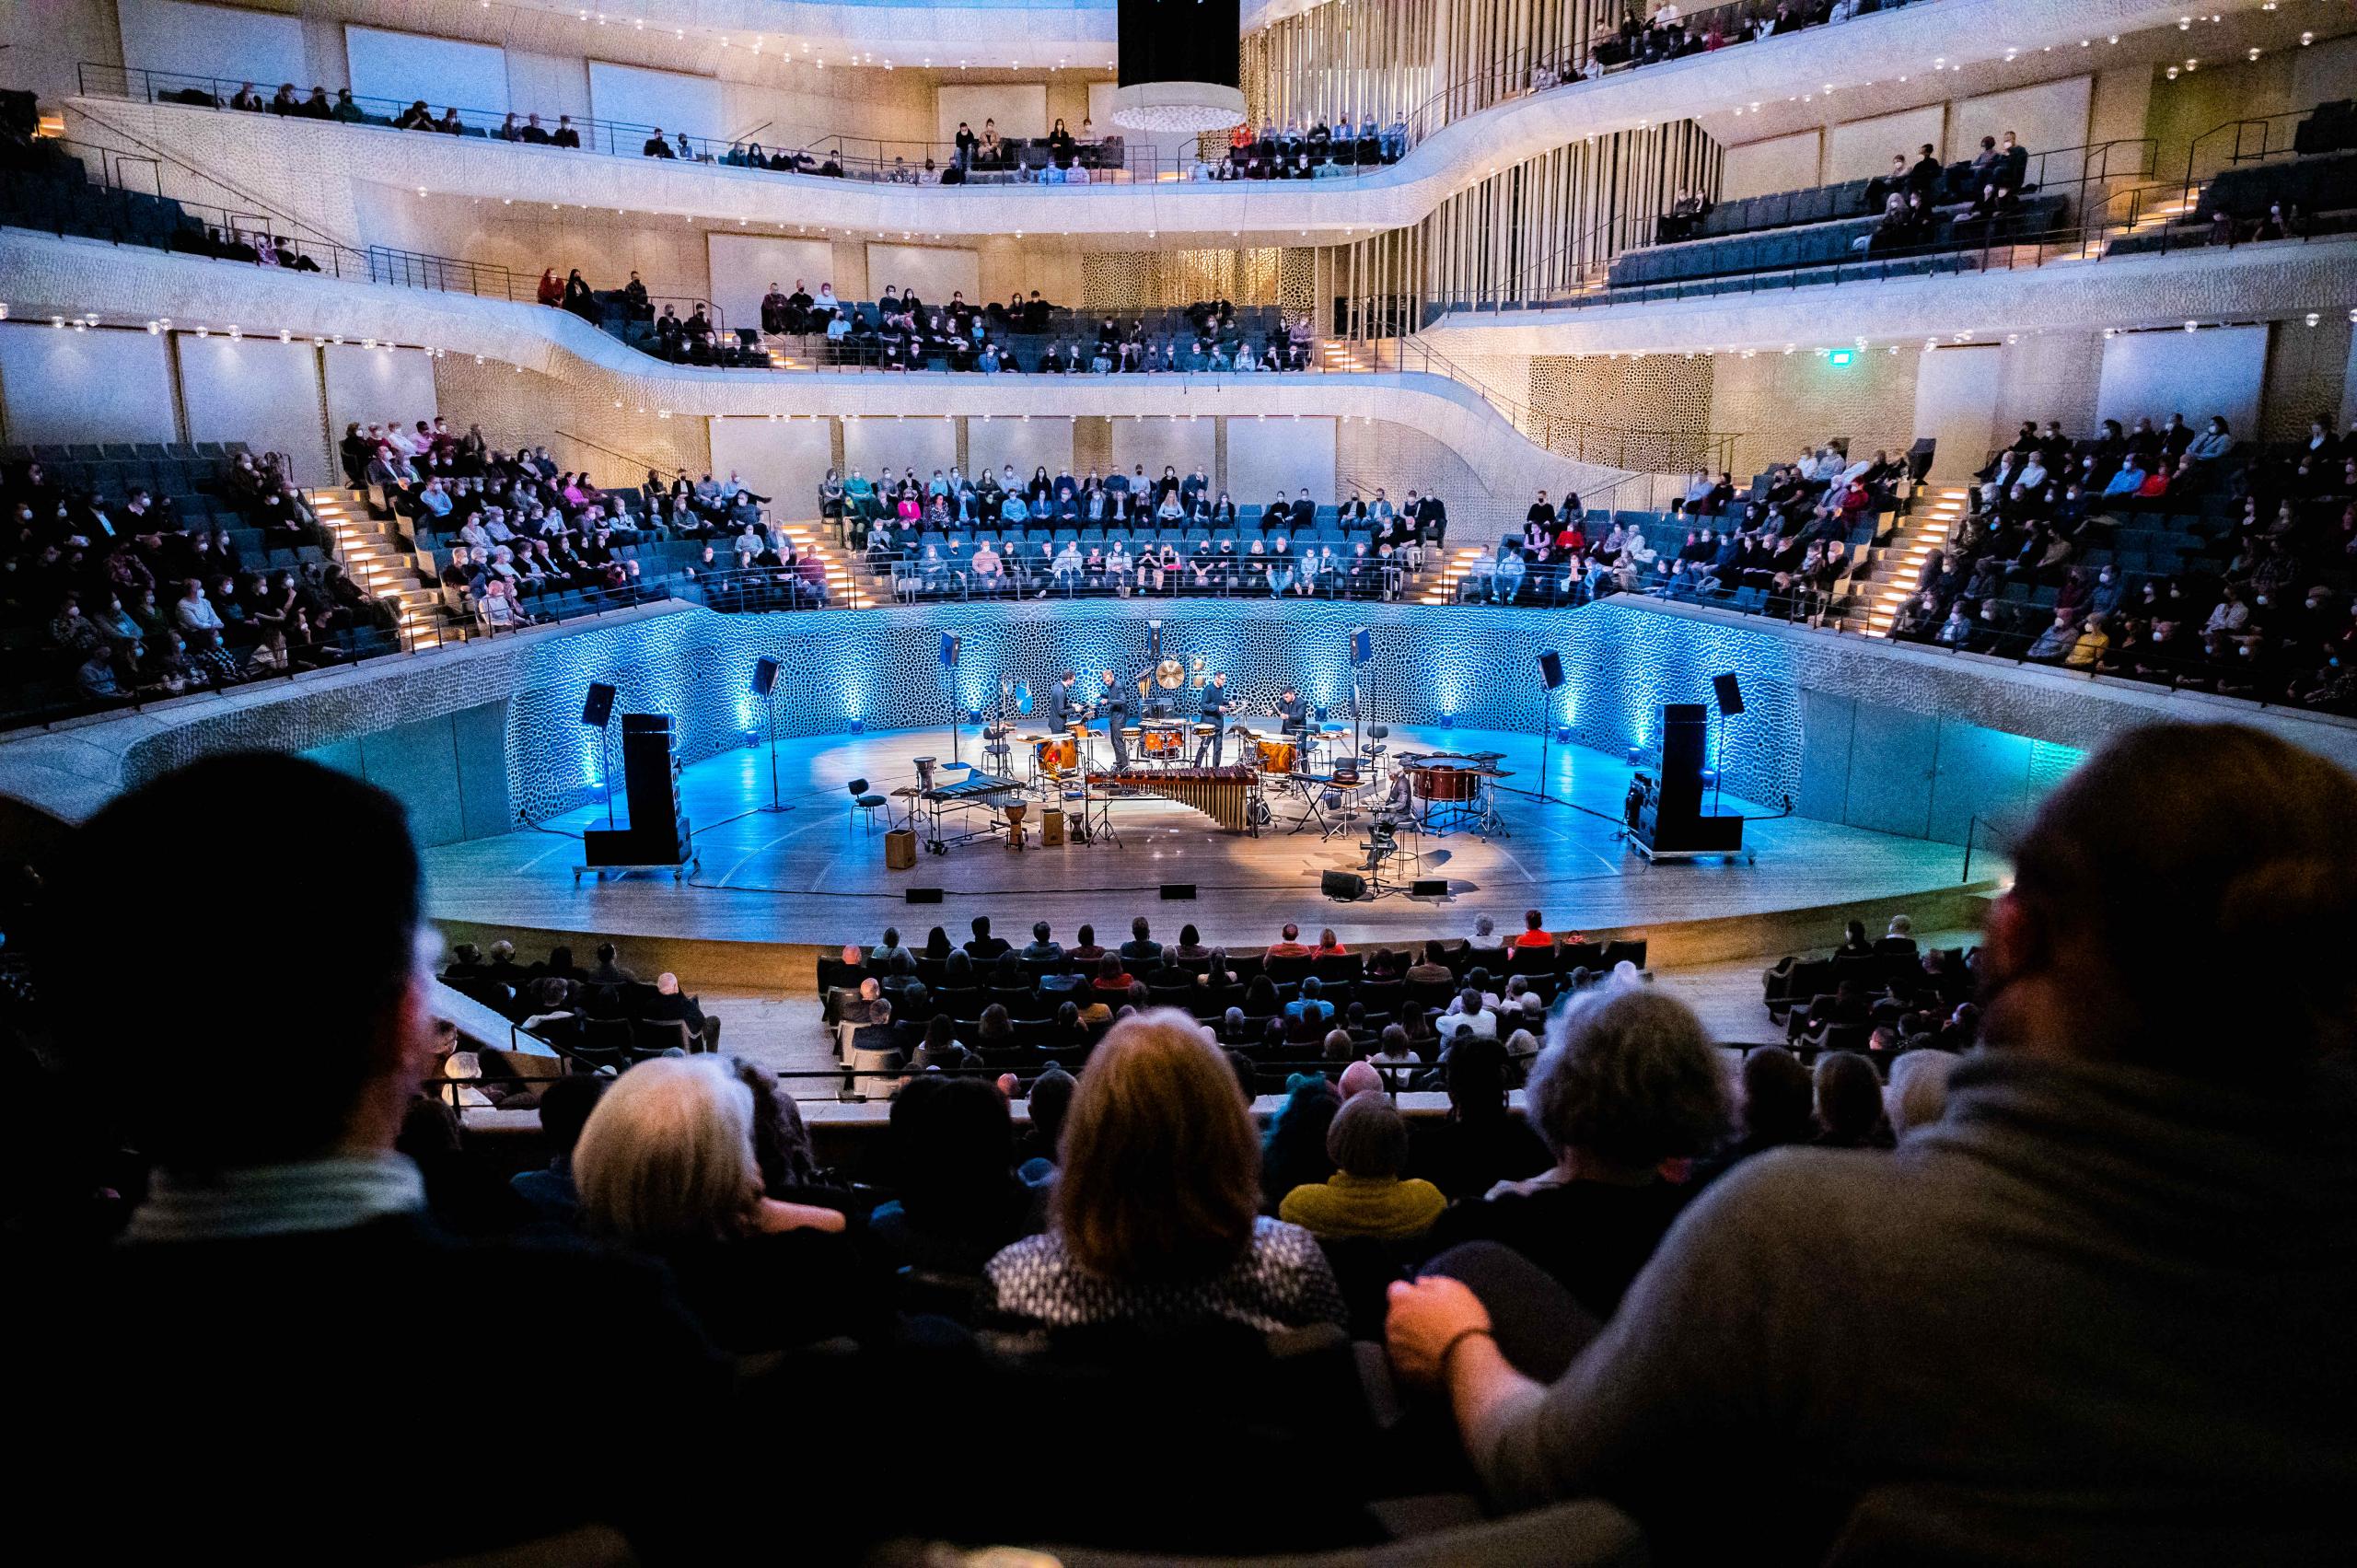 @ Elbphilharmonie (Fotos by Dimitrij Leltschuk)